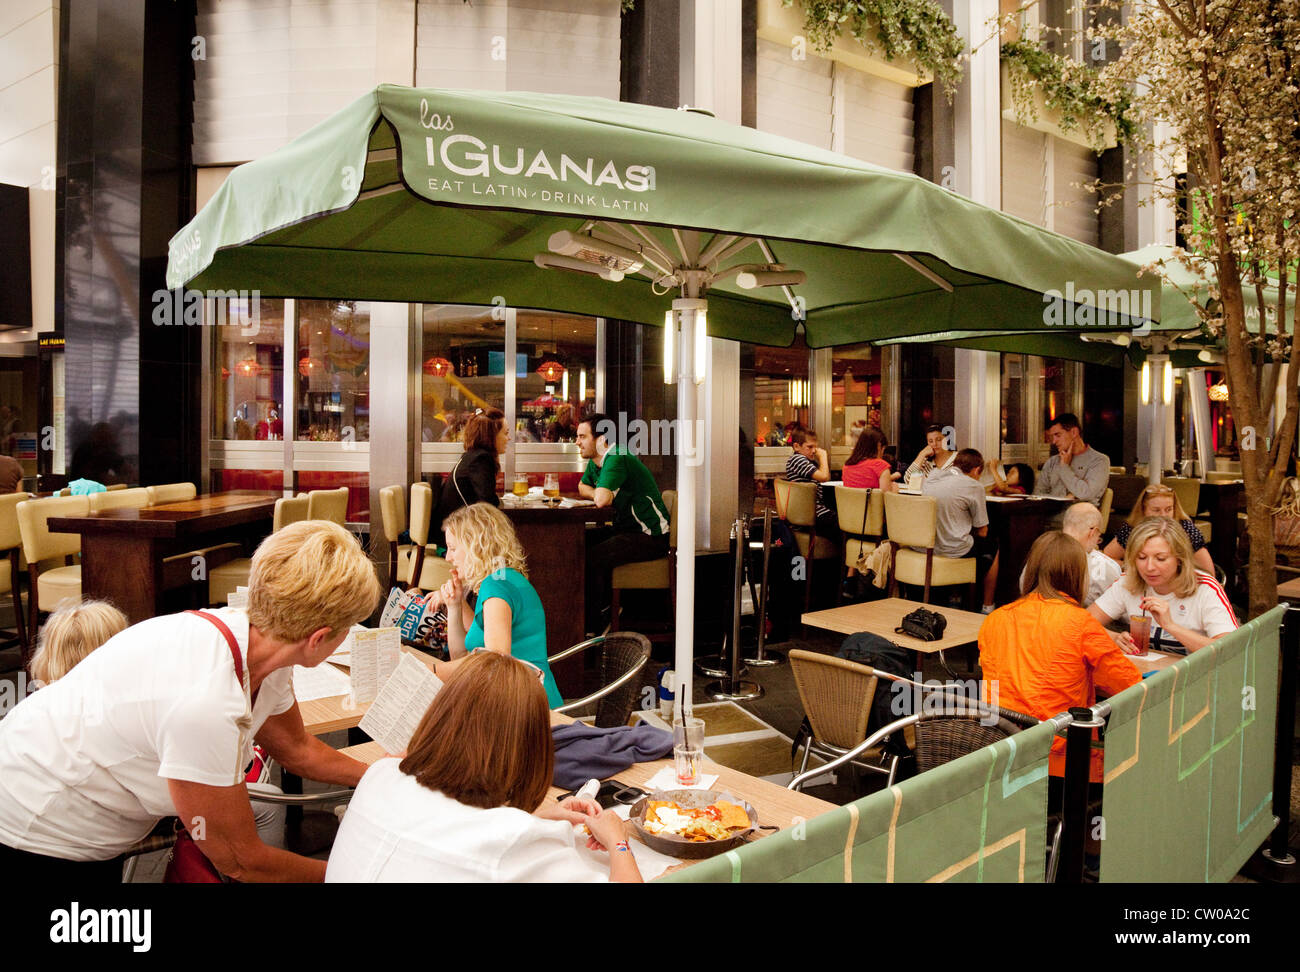 people eating a meal at Las Iguanas latin food restaurant, O2 arena, London UK Stock Photo